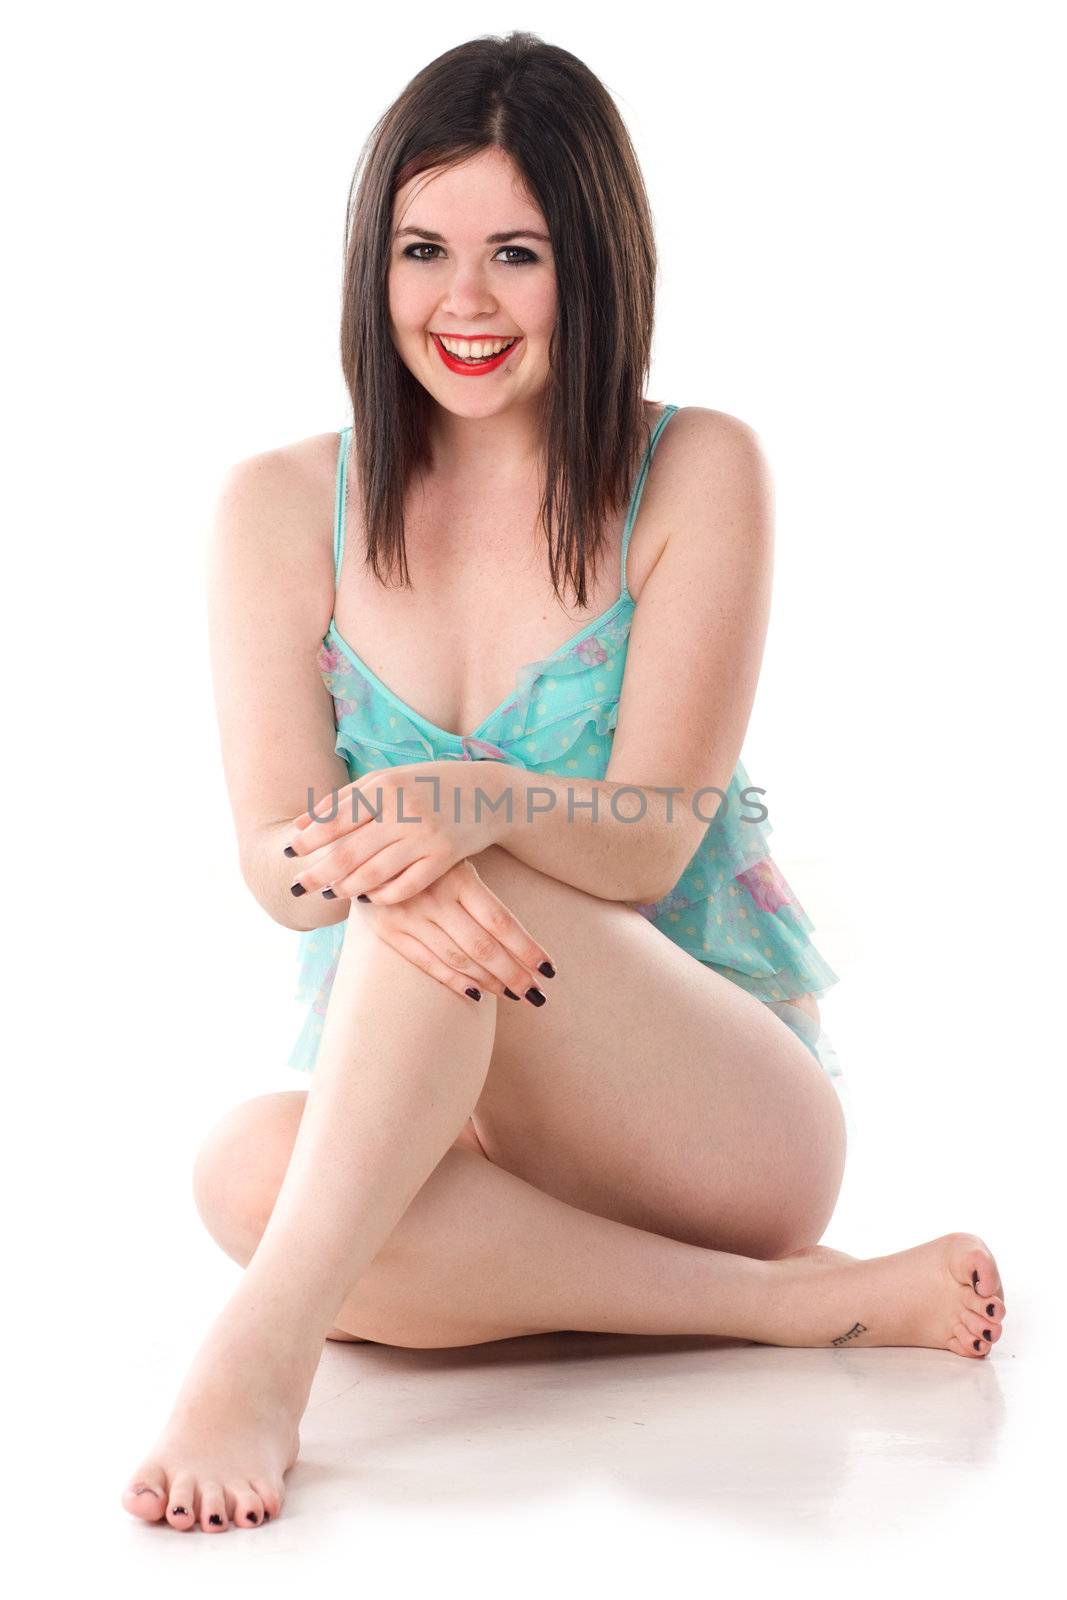 cute girl in pin-up pose in lingerie by krazeedrocks